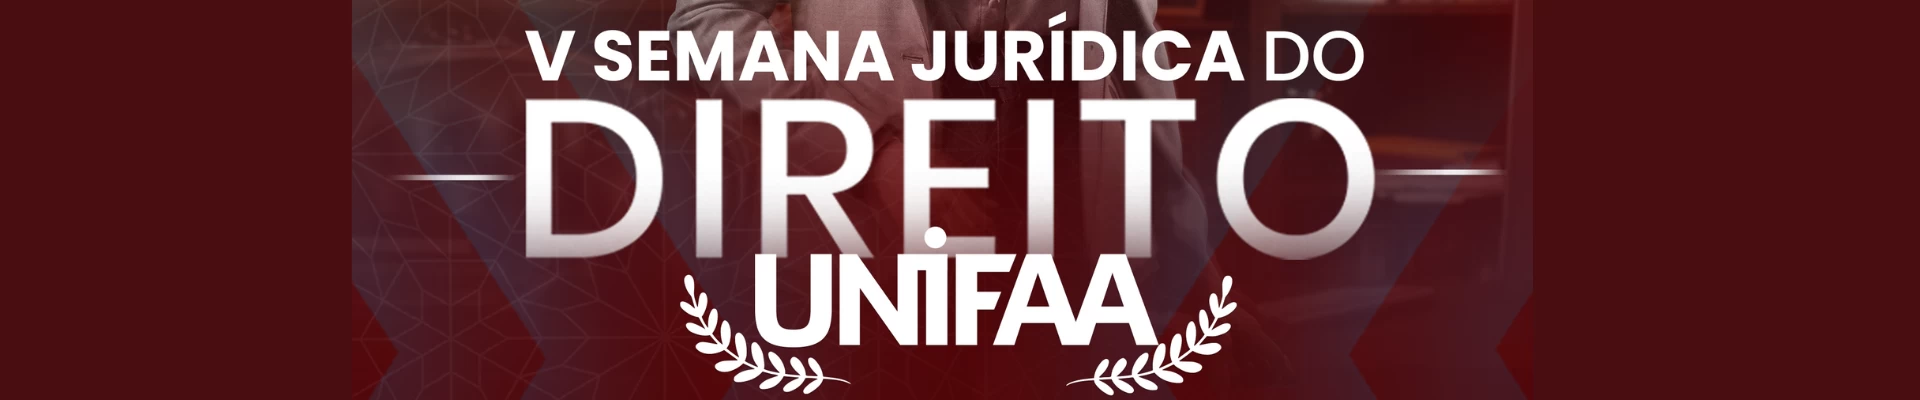 V Semana Jurídica do Direito UNIFAA